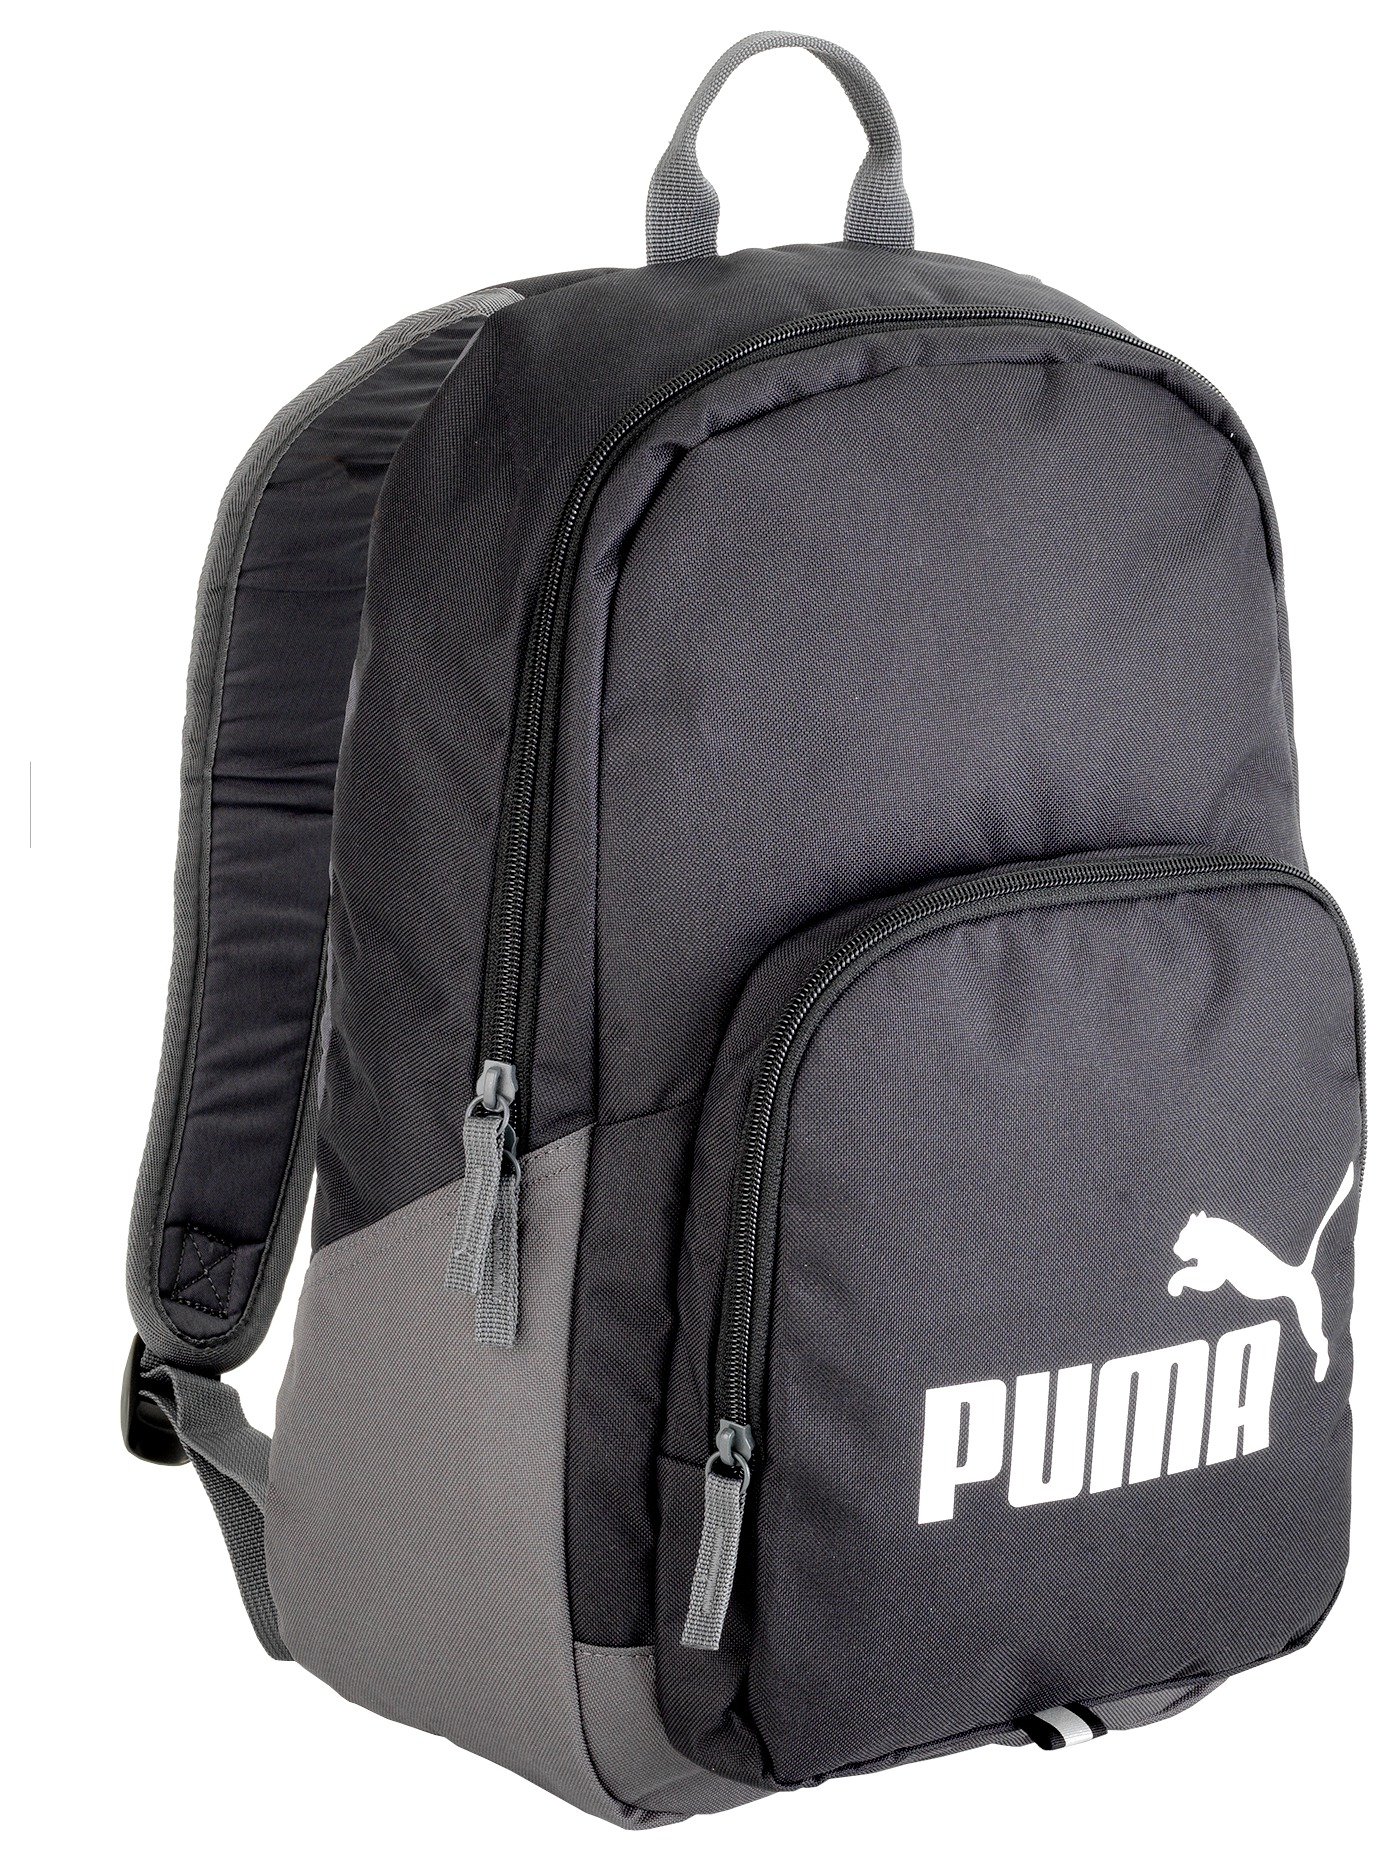 puma backpack argos